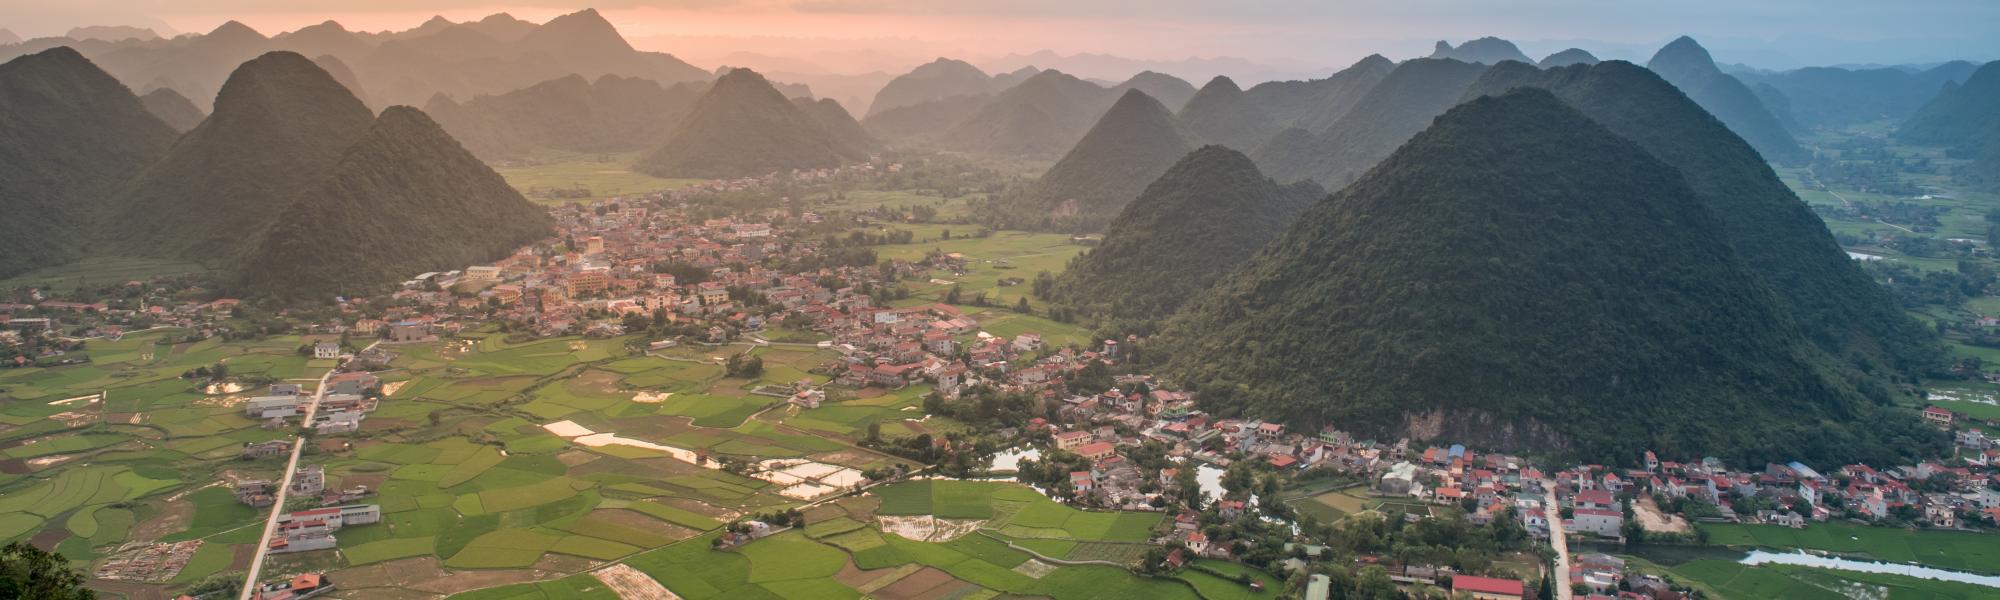 Lang Son valley, Vietnam